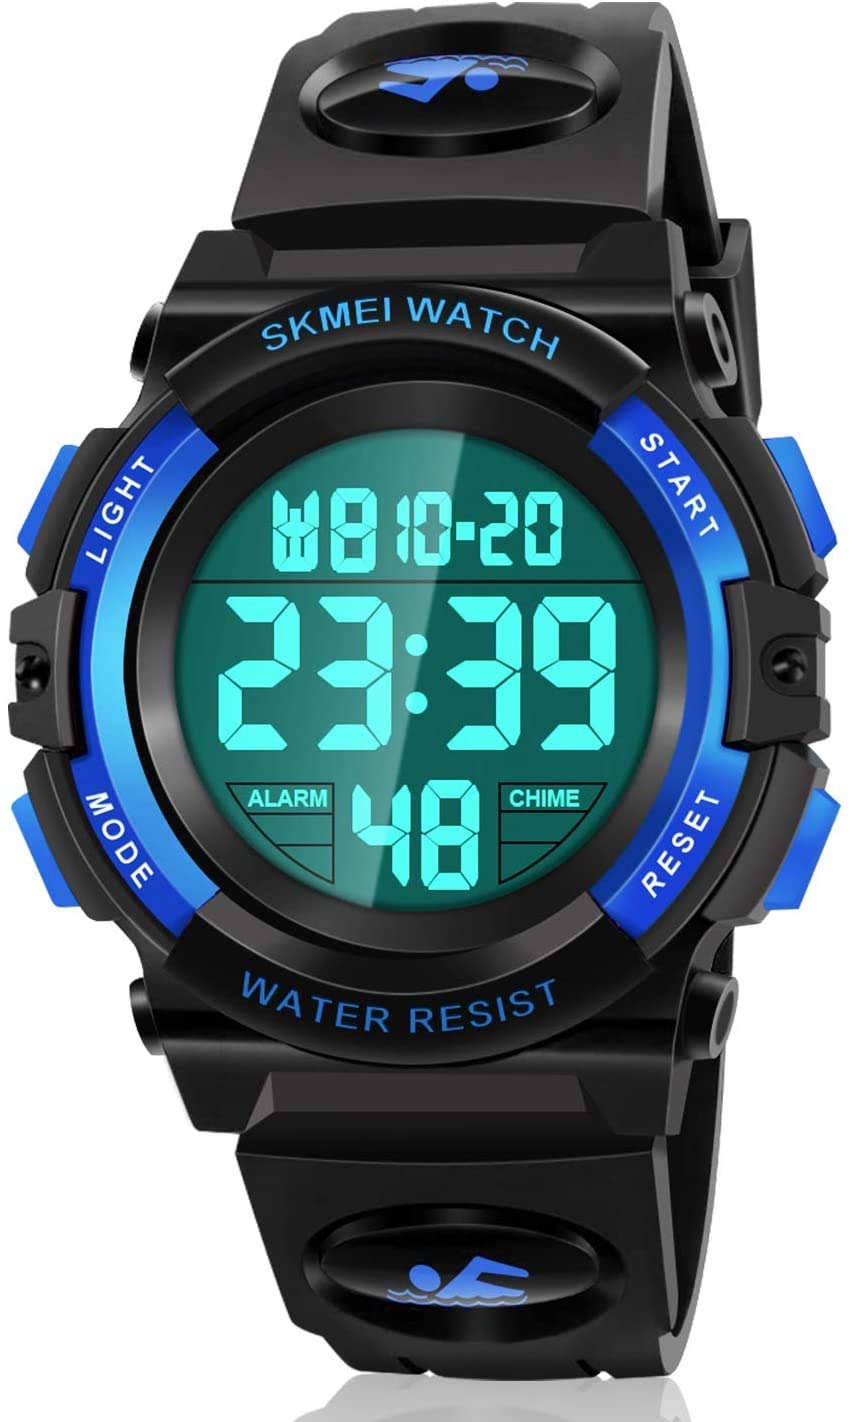 ATIMO LED 50M Waterproof Sports Digital Watch for Kids - Kids Gifts